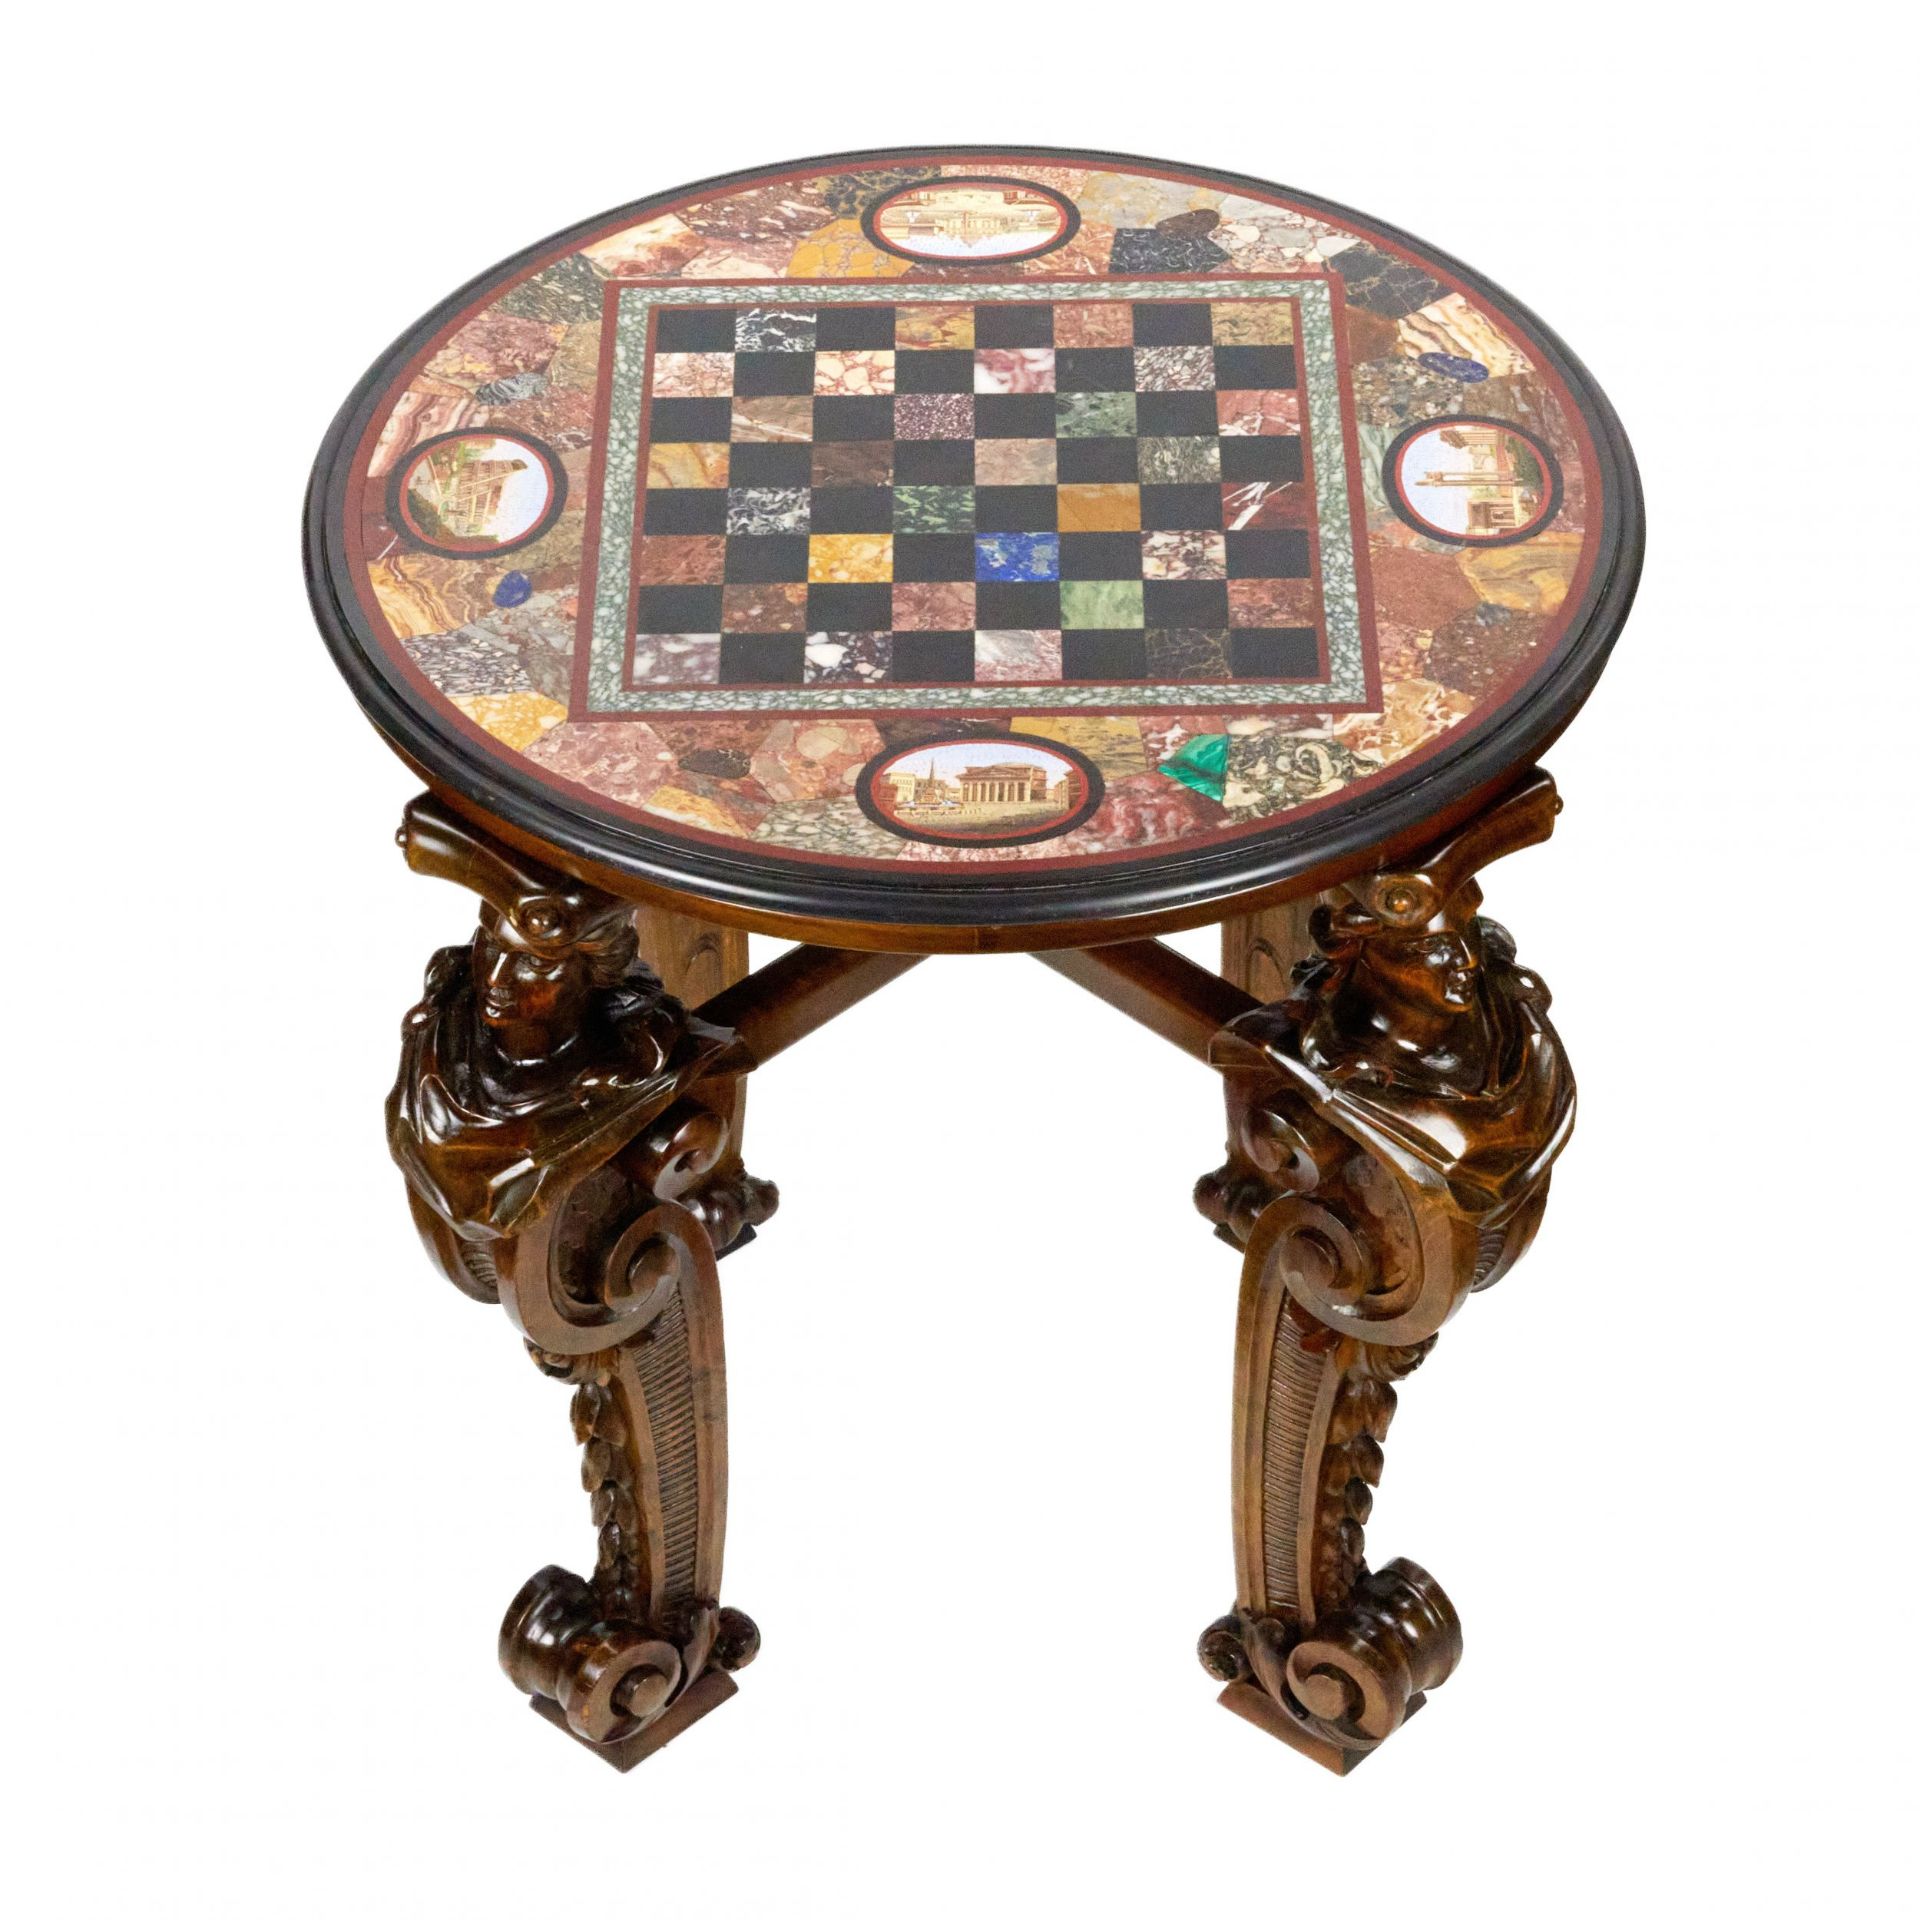 An impressive chess table with precious Roman mosaics on carved legs. - Bild 5 aus 10